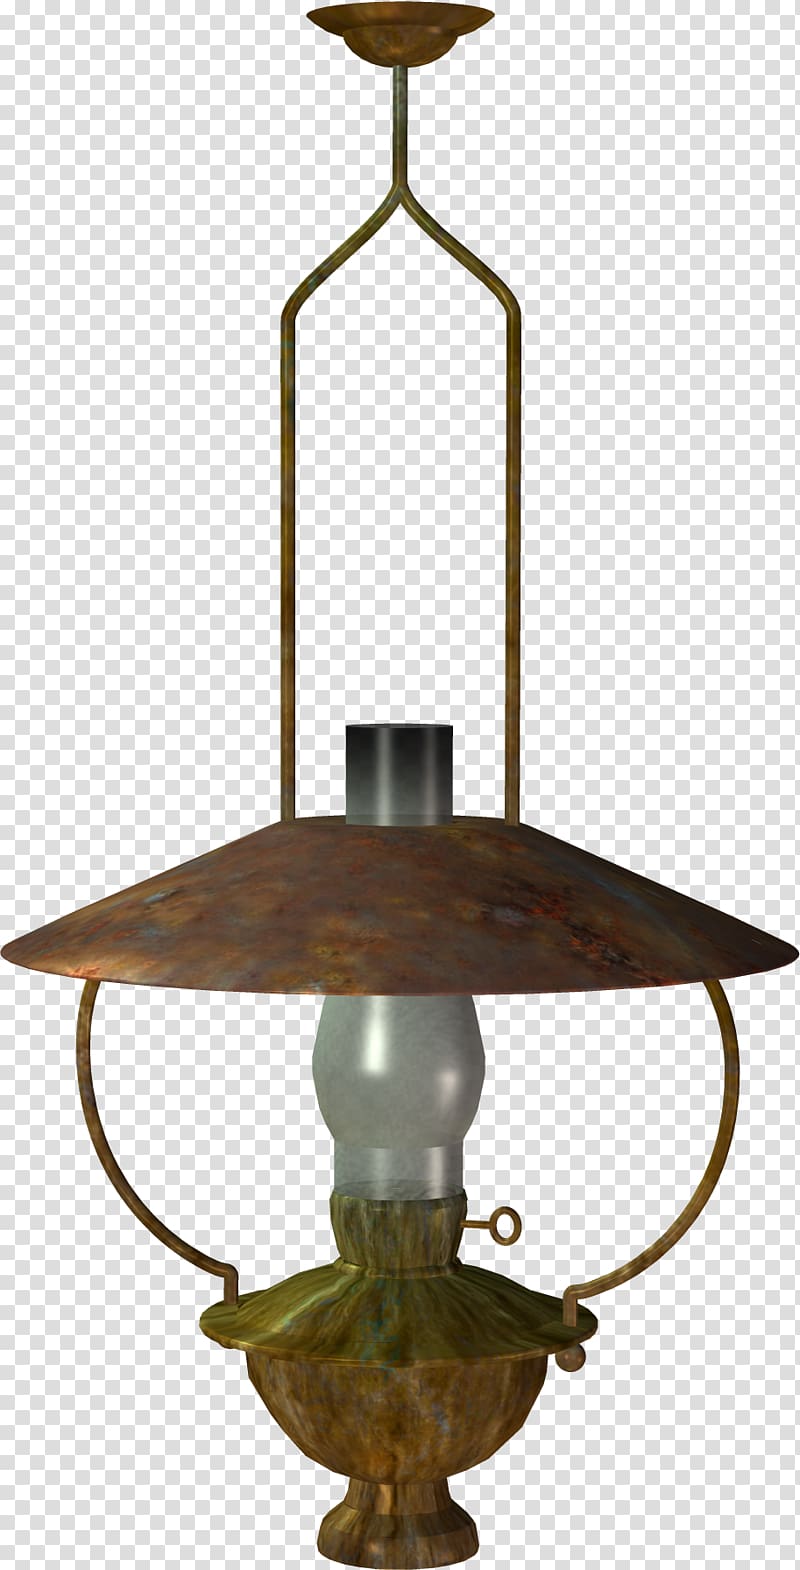 Lamp Shades Light fixture Kerosene lamp, lamp transparent background PNG clipart